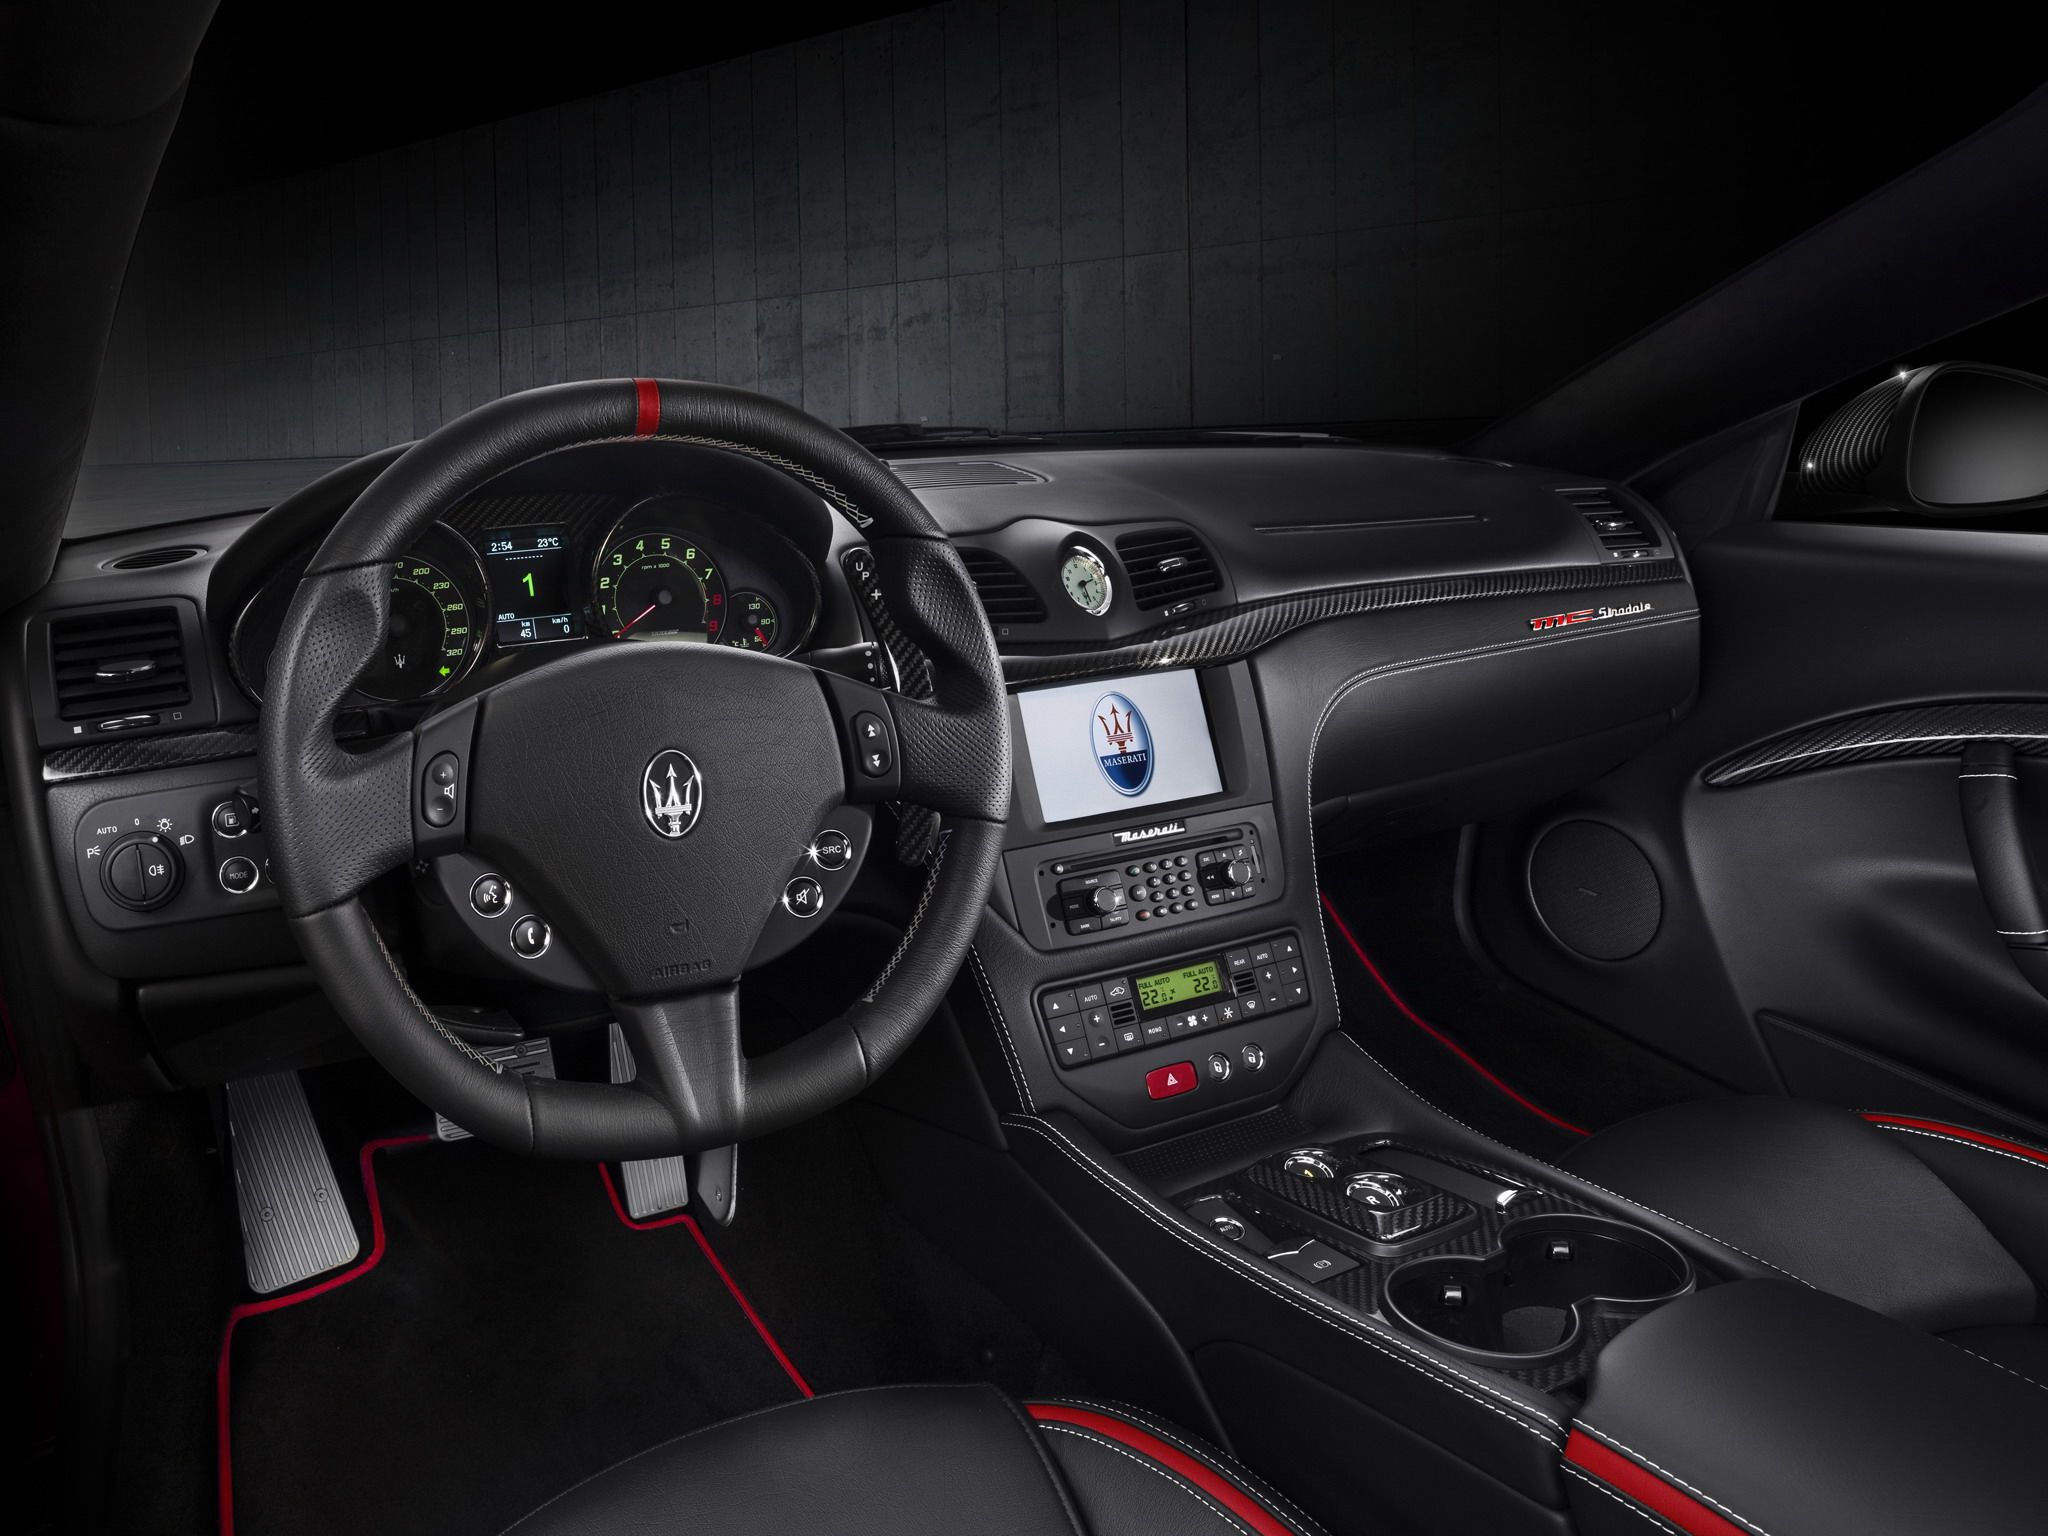 2015 Maserati GranTurismo MC Centennial Edition Coupe and Convertible